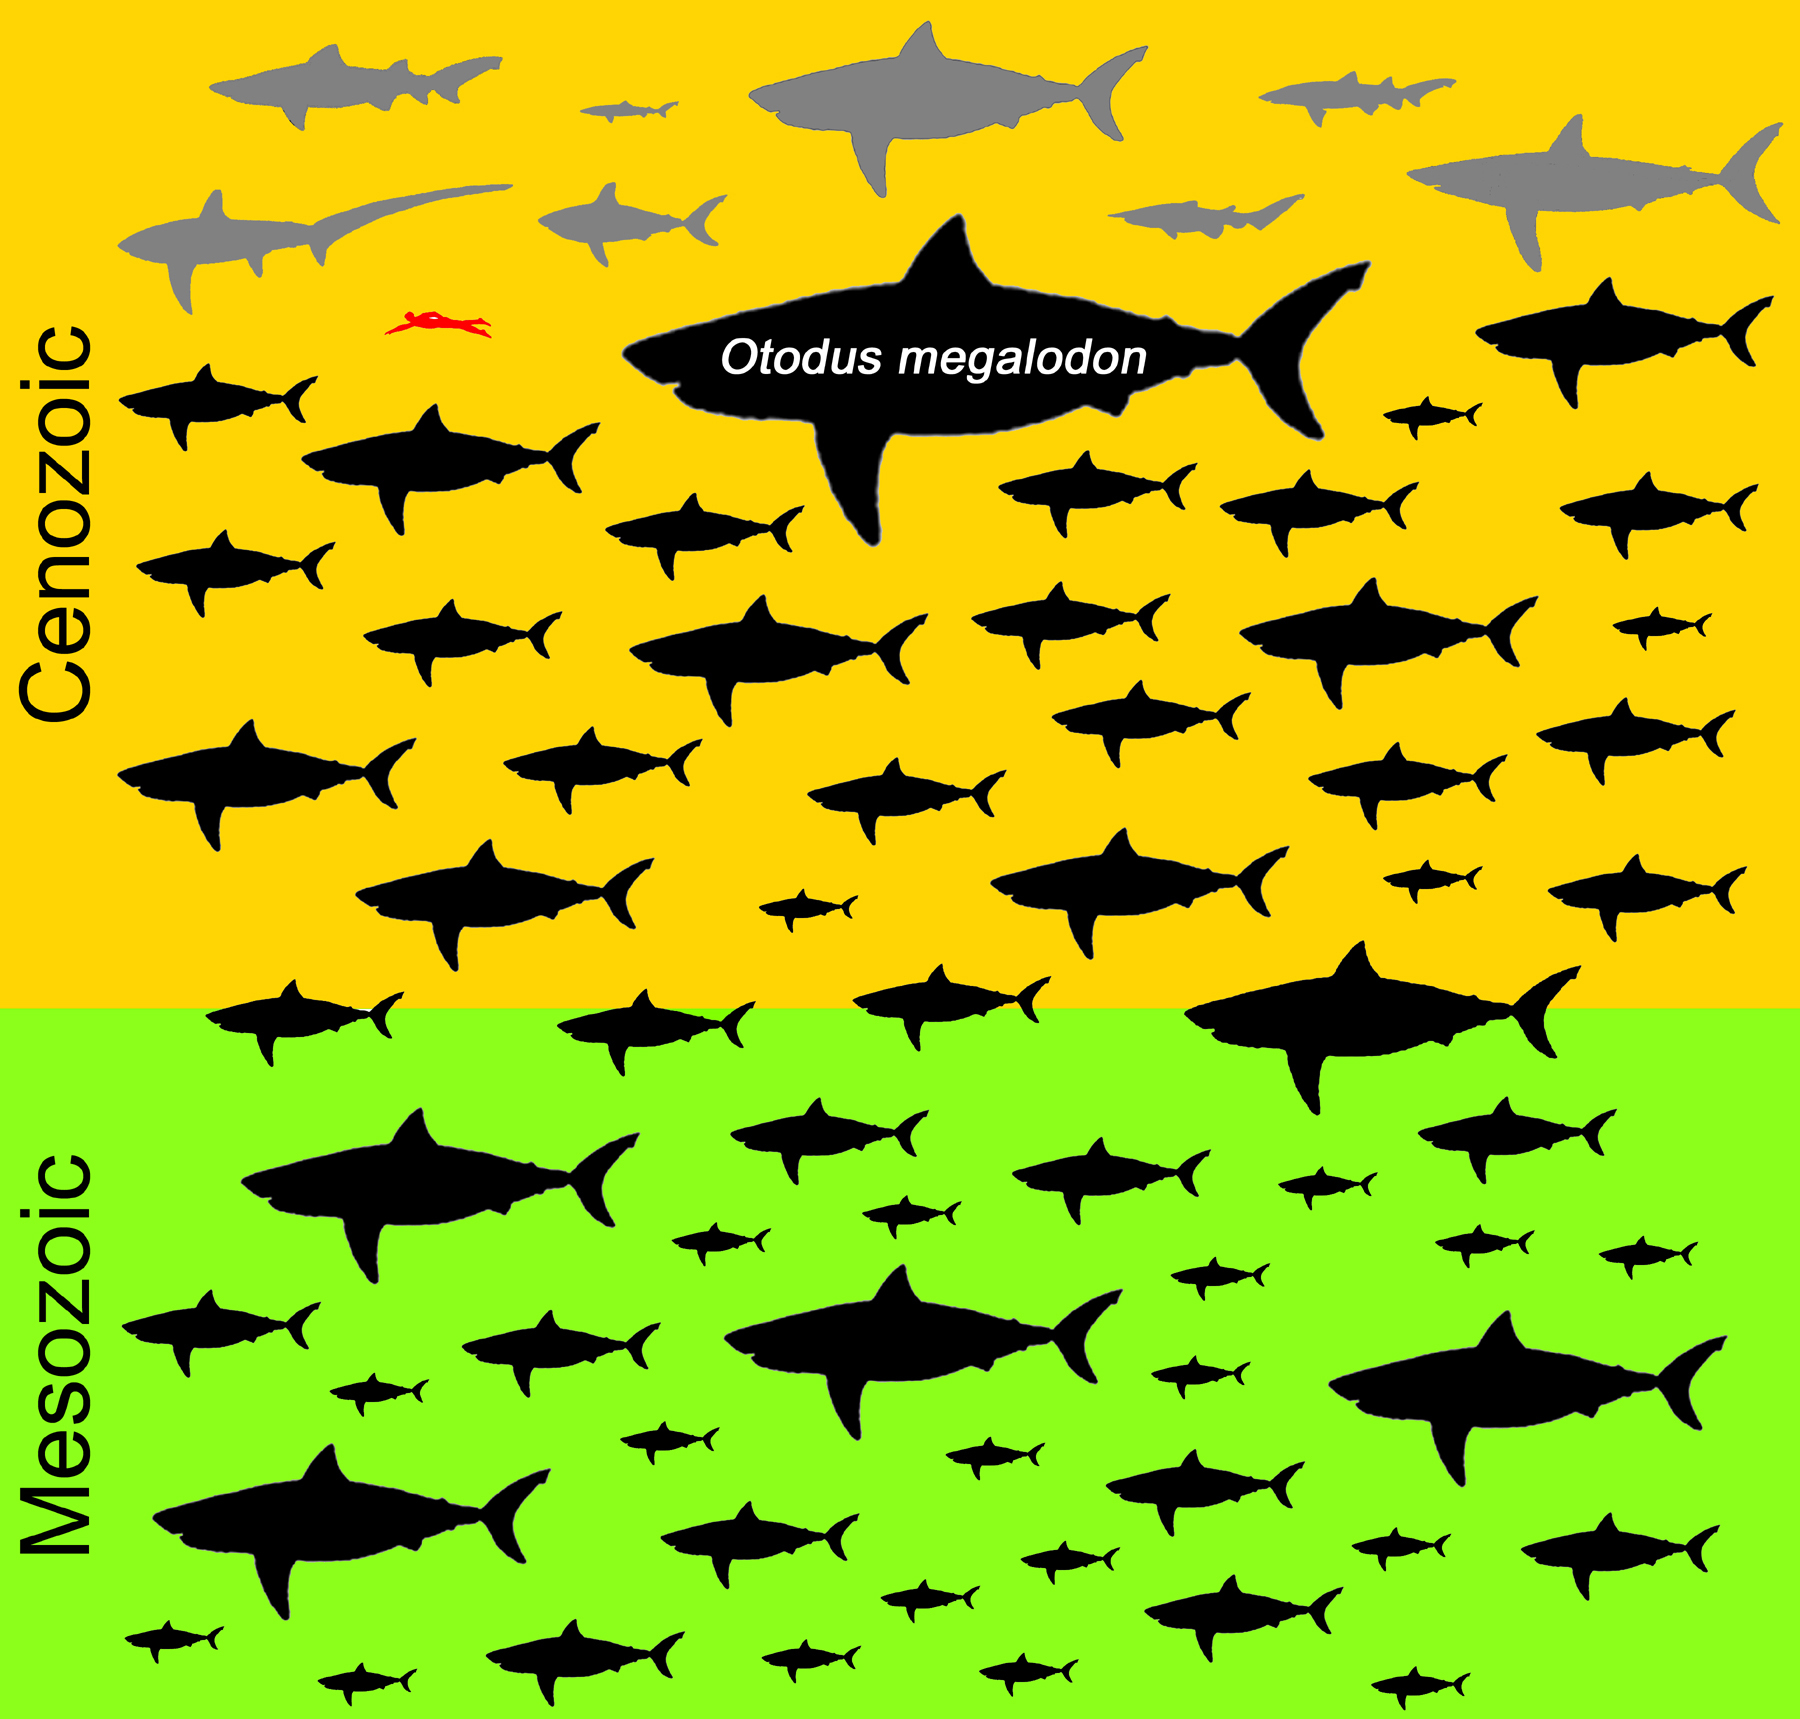 Shark graphic